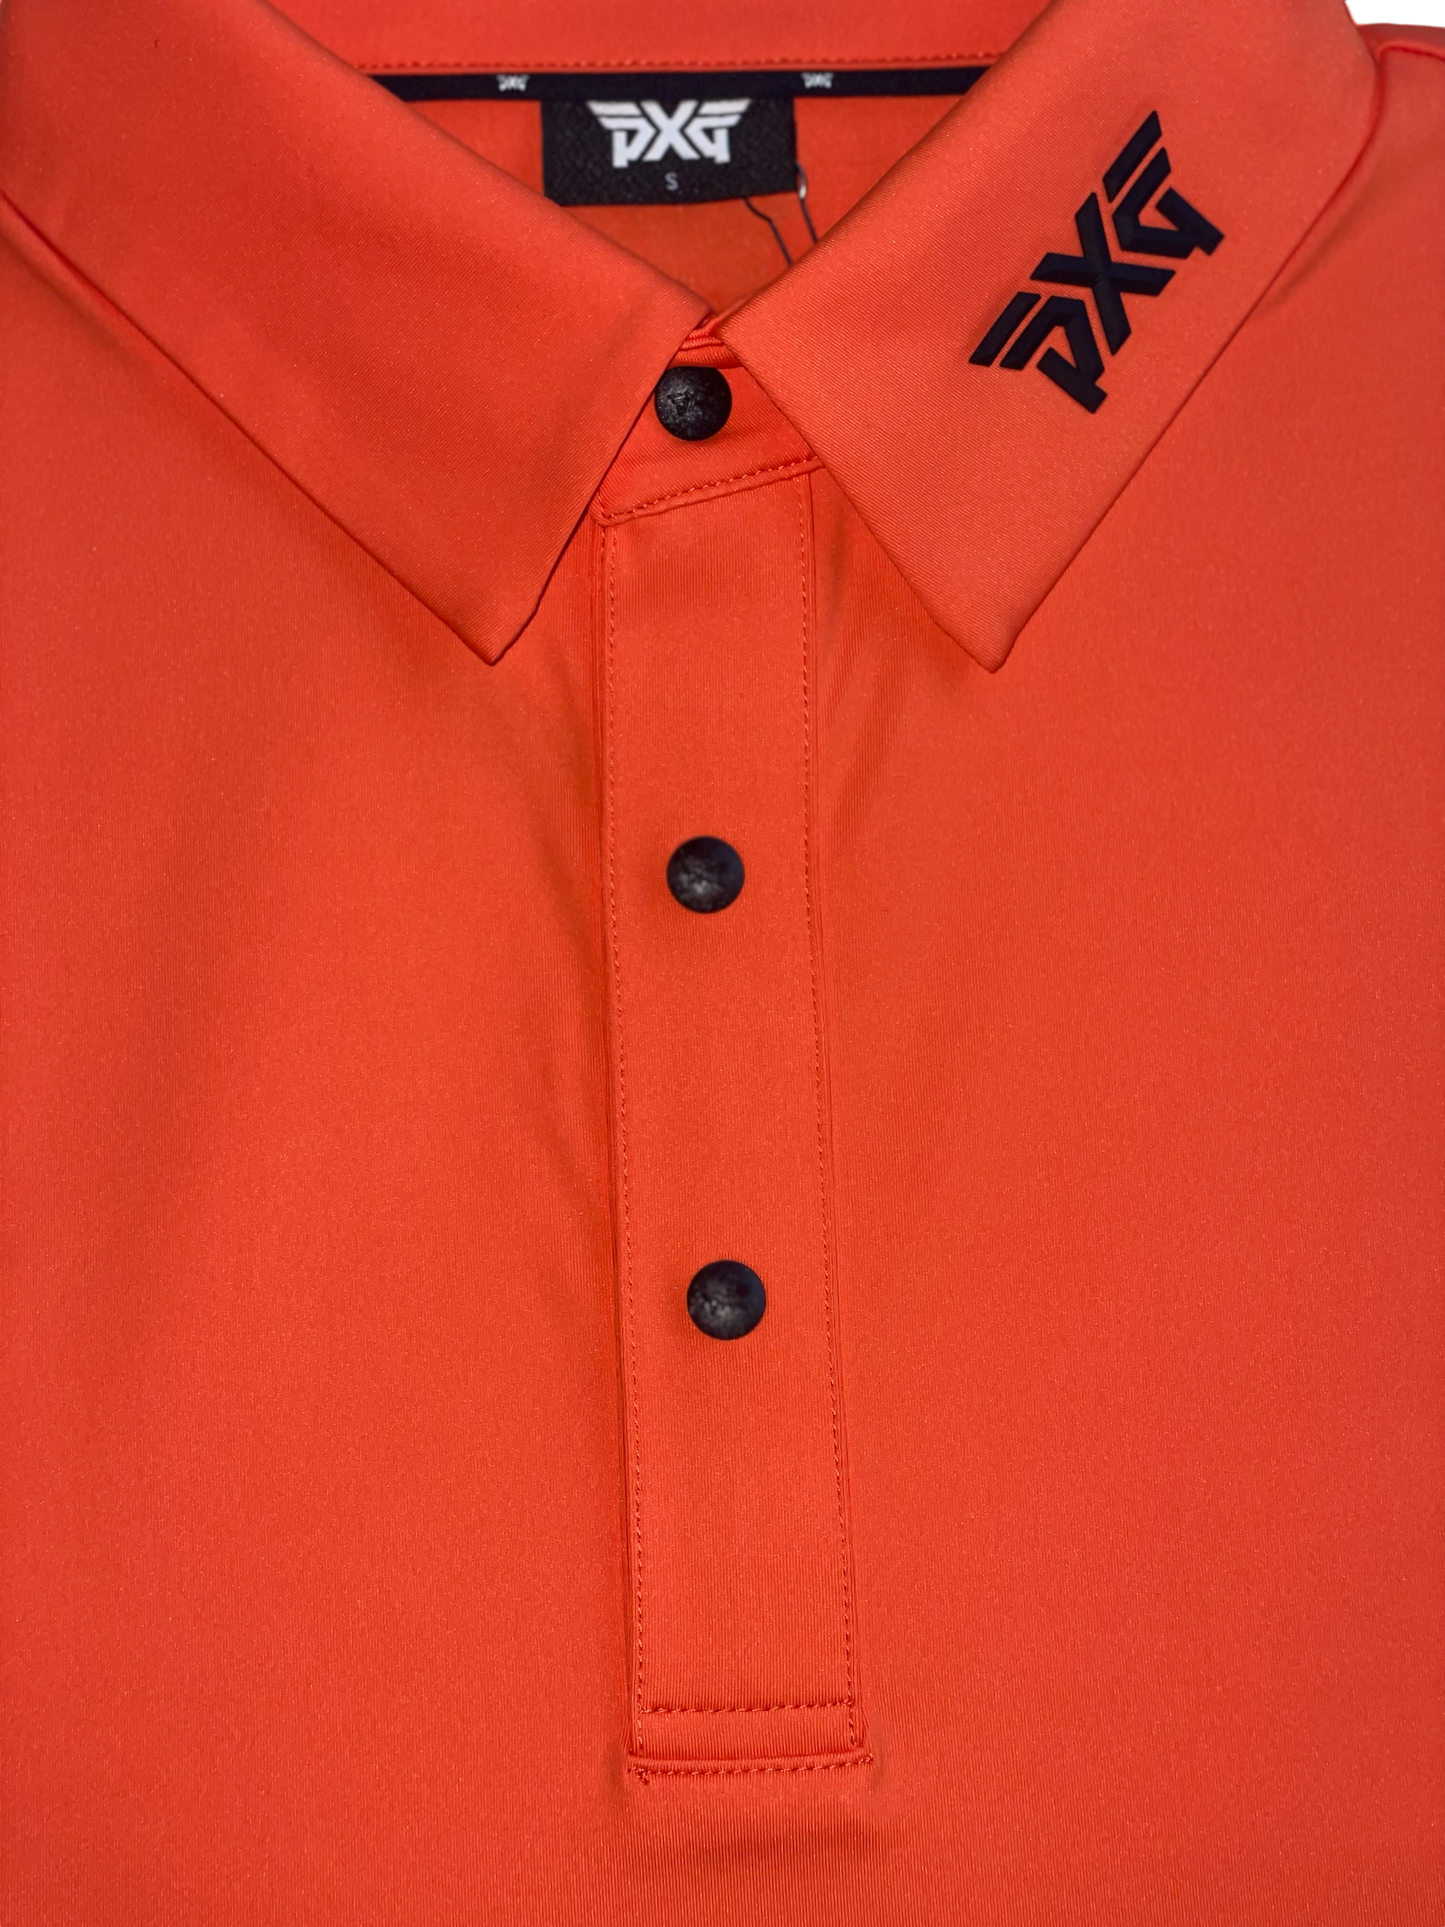 PXG Men's AF BP Signature Orangeade Polo